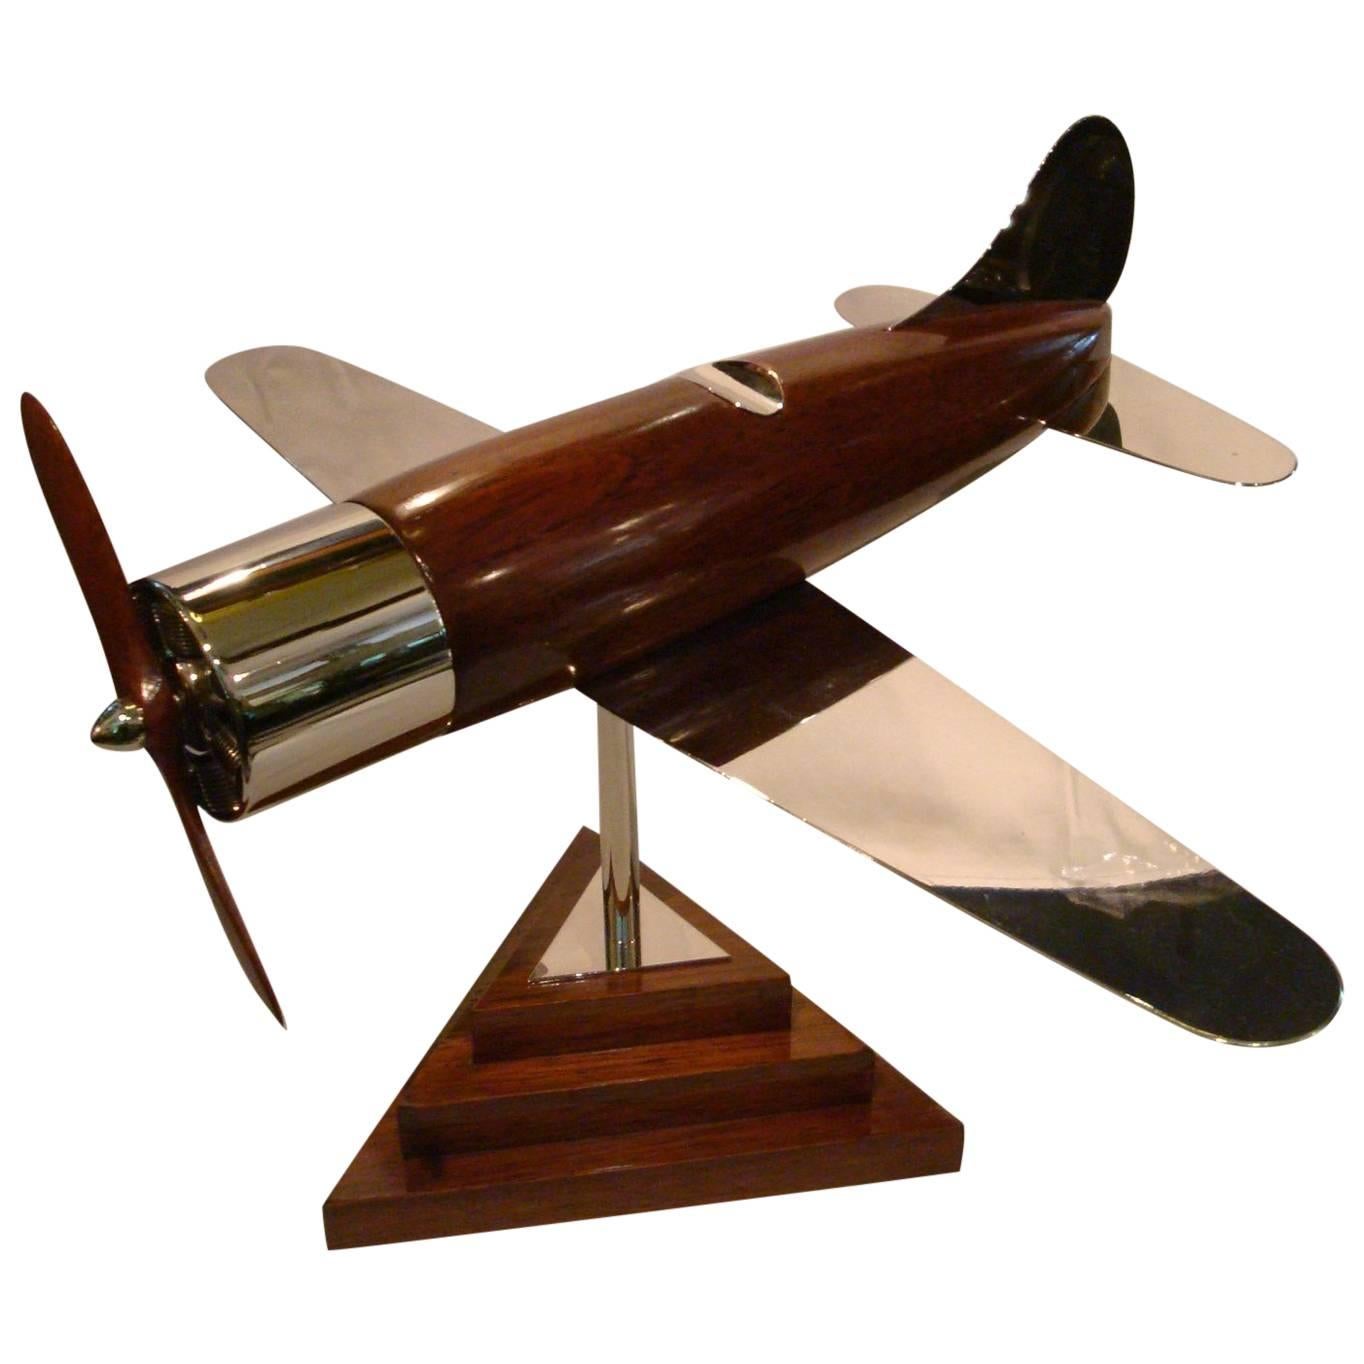 20th Century, Art Deco Streamline Airplane Wooden Model Sculpture, 1930s